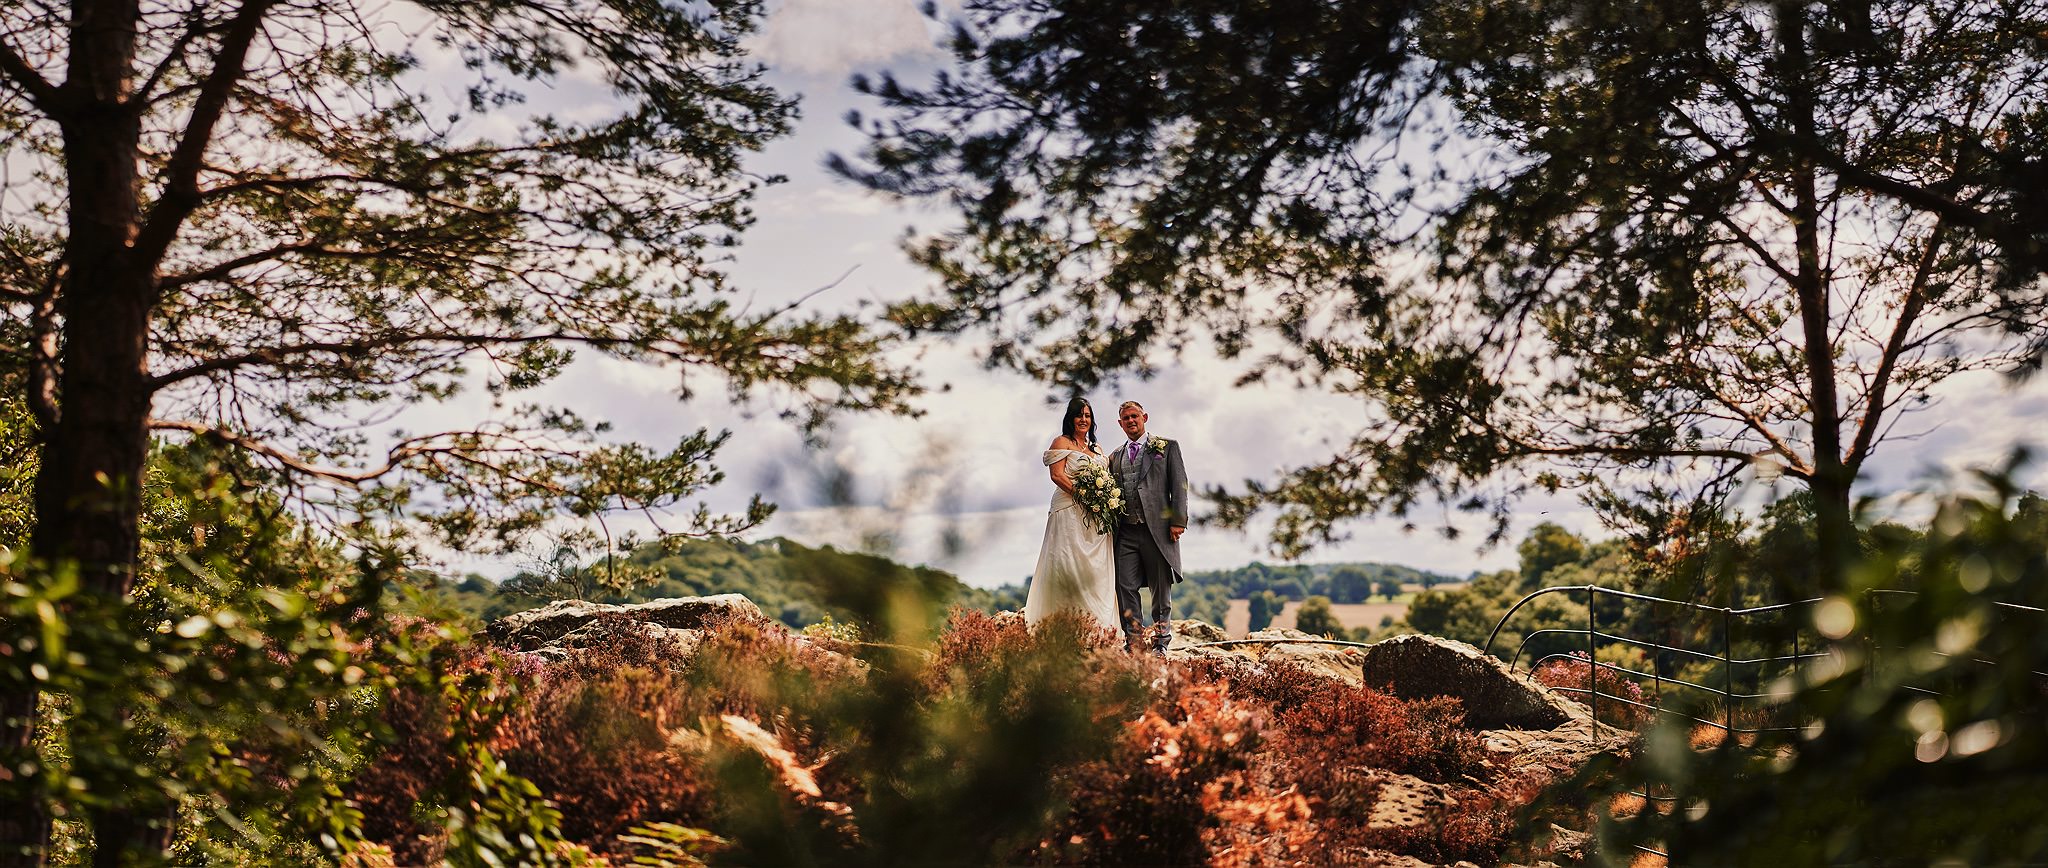 Hawkstone Park Follies Wedding Photographer